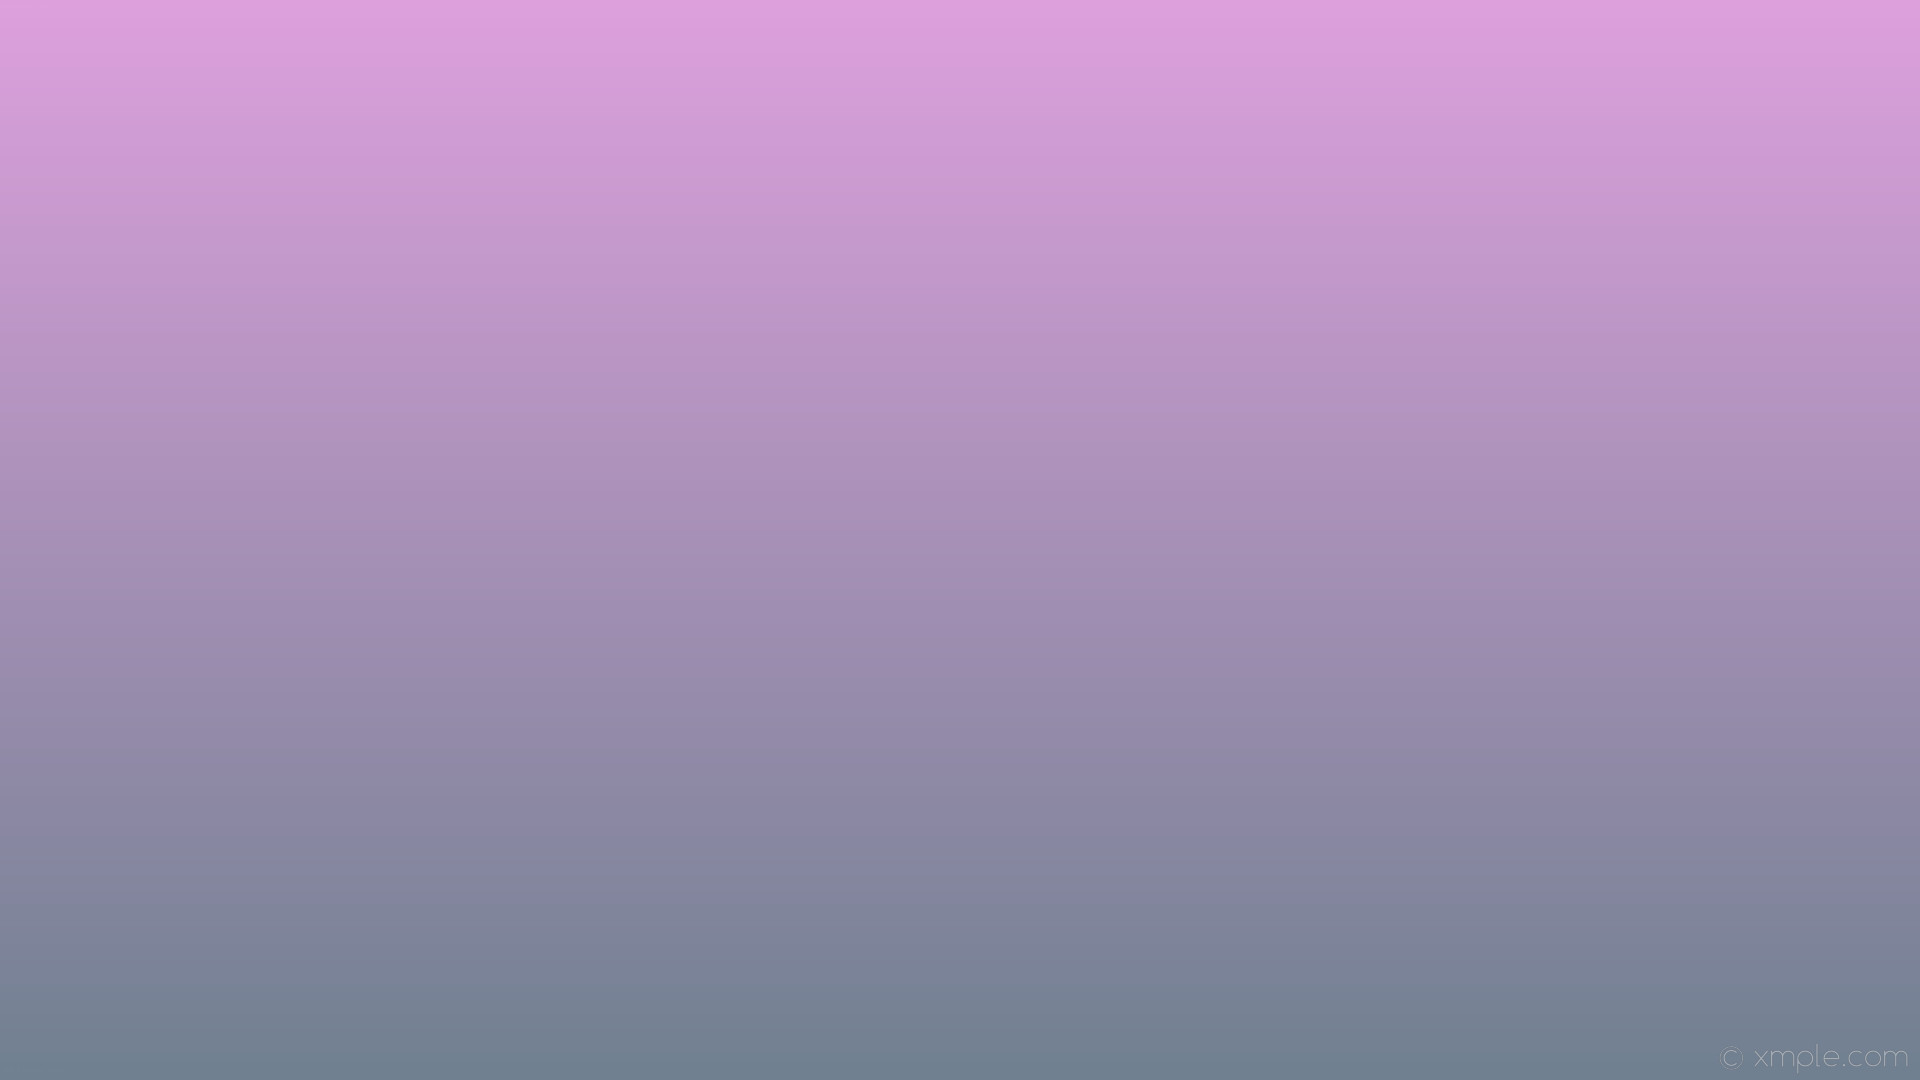 1920x1080 wallpaper linear purple grey gradient plum slate gray #dda0dd #708090 90Â°